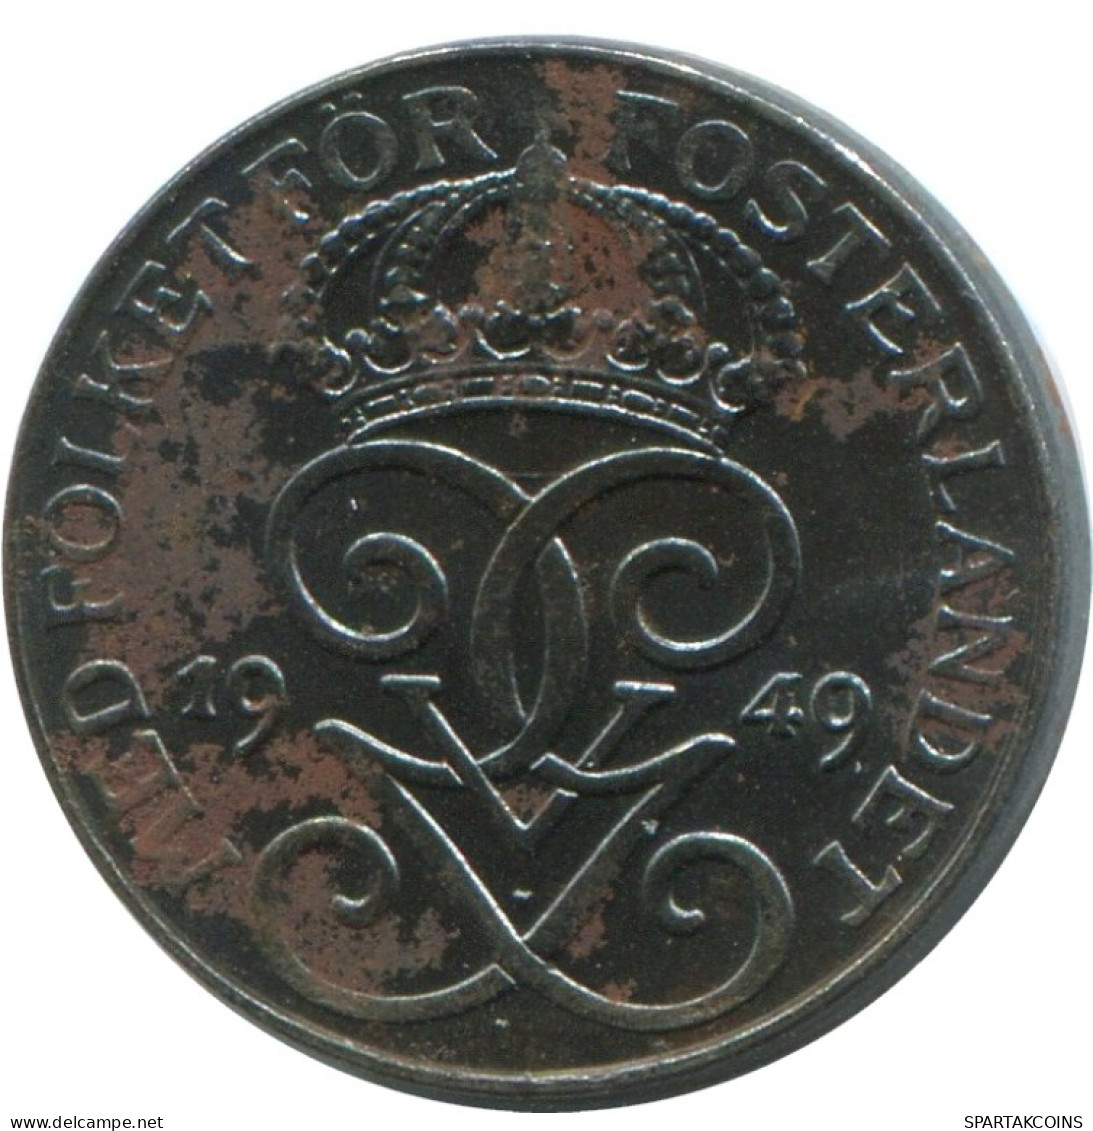 1 ORE 1949 SWEDEN Coin #AD322.2.U.A - Sweden